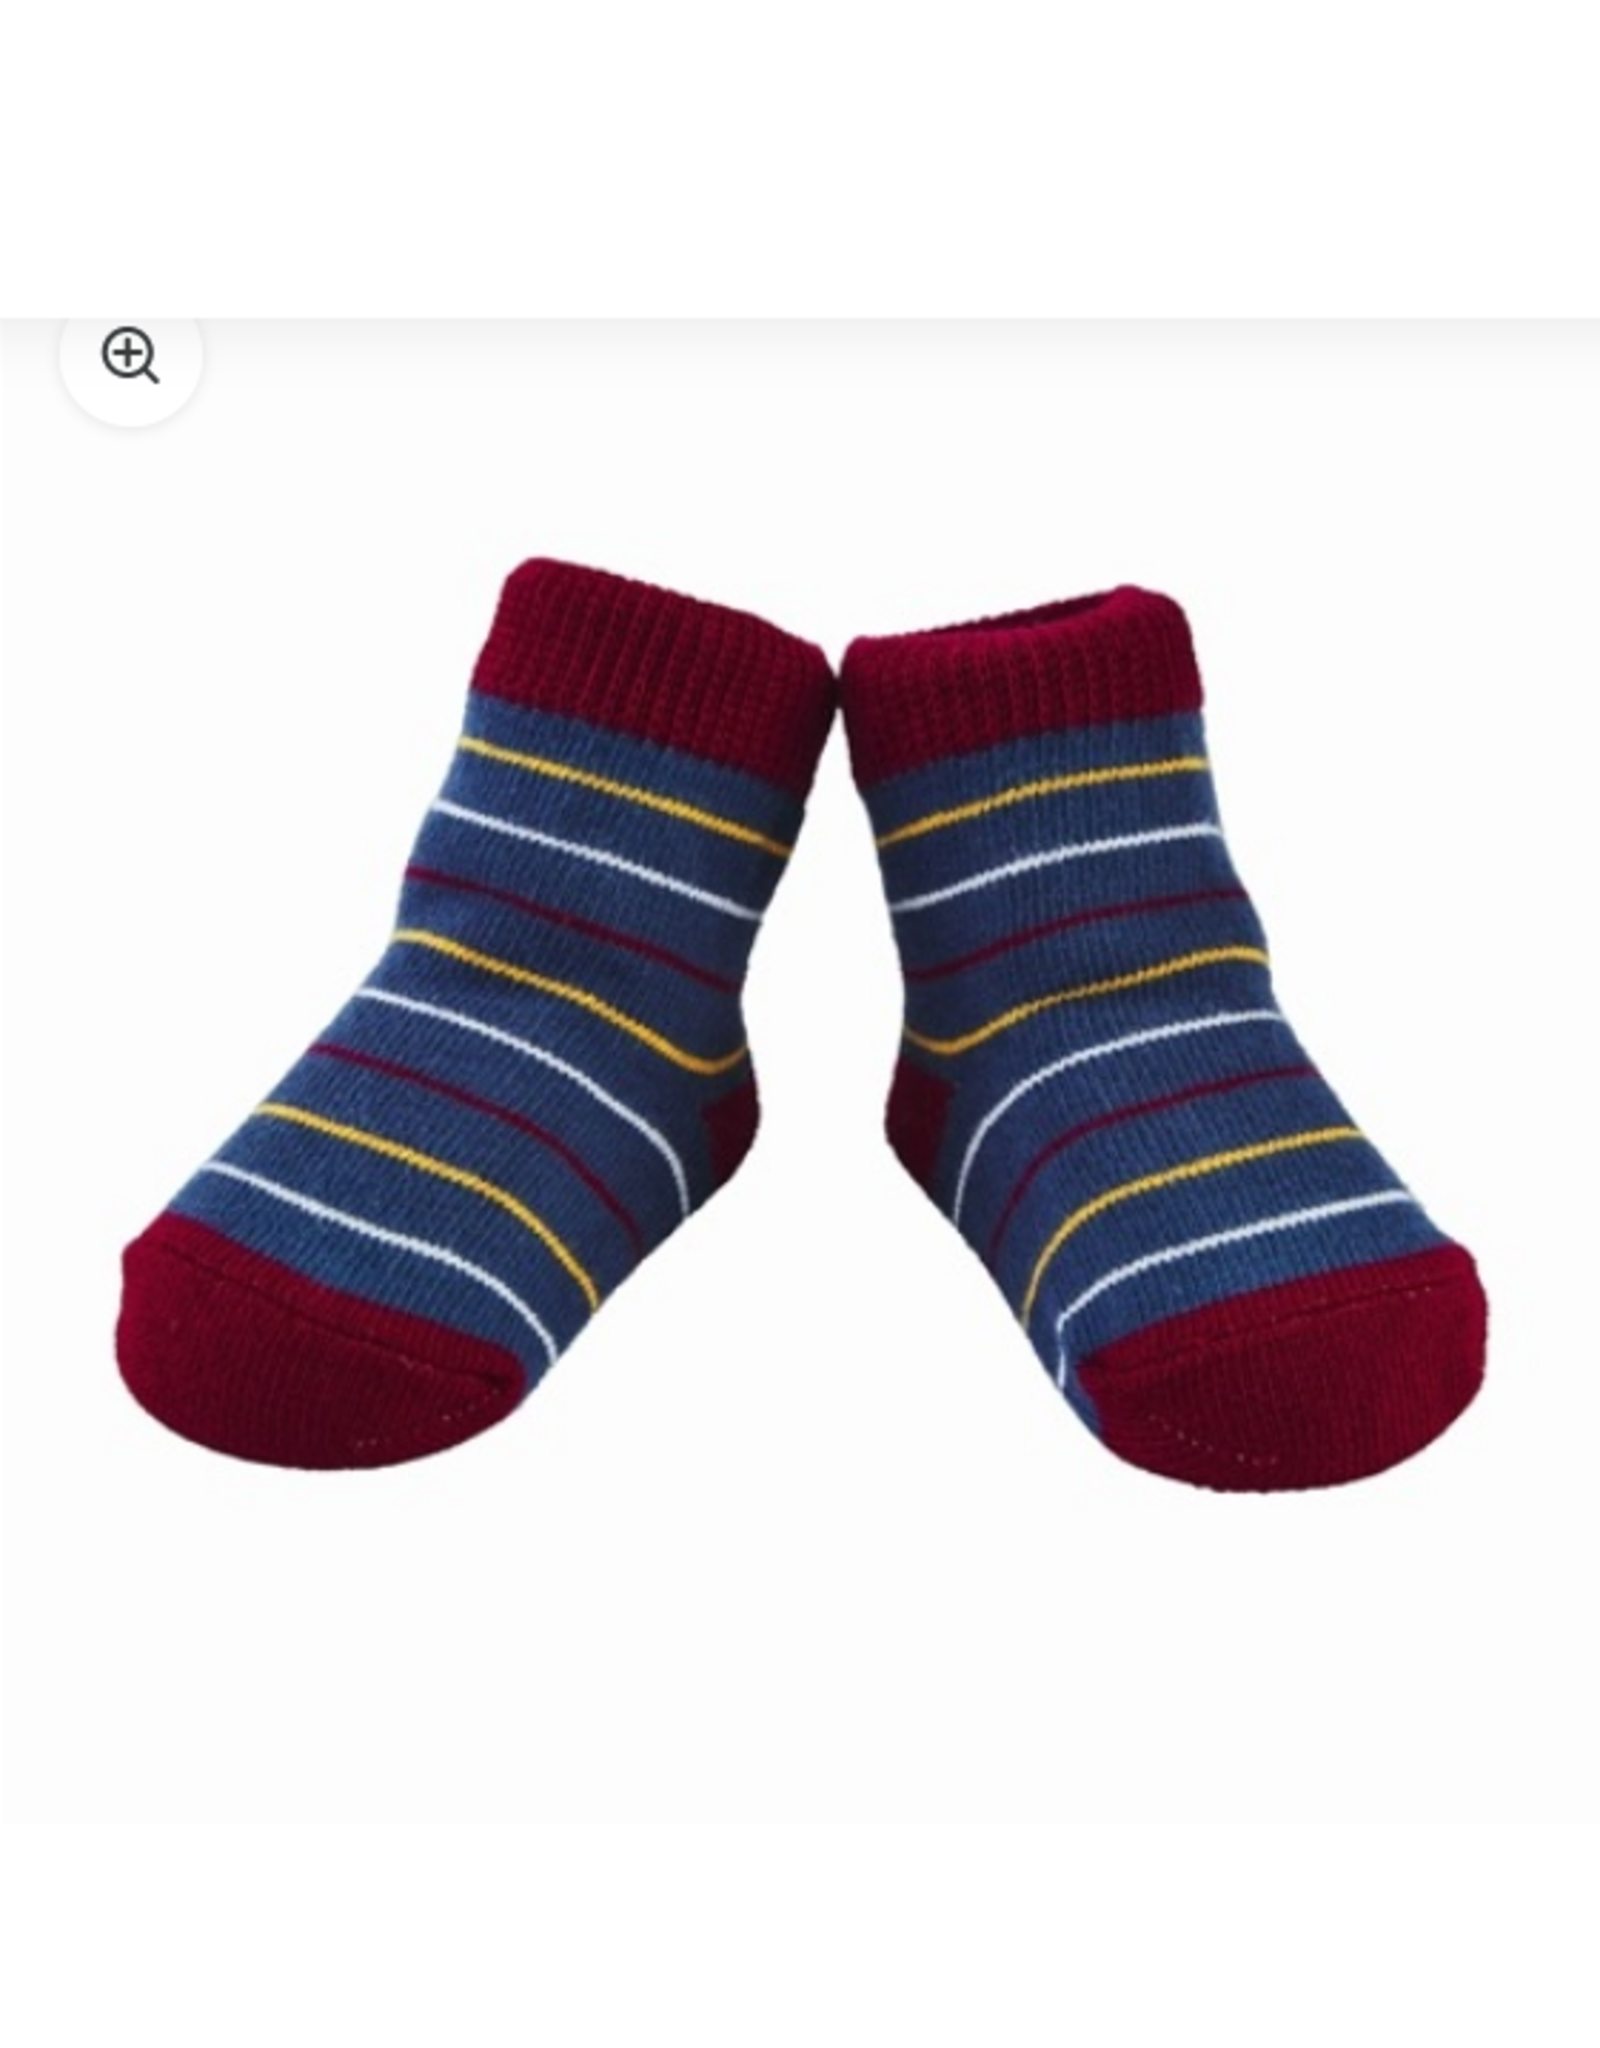 Mudpie Navy Striped Socks